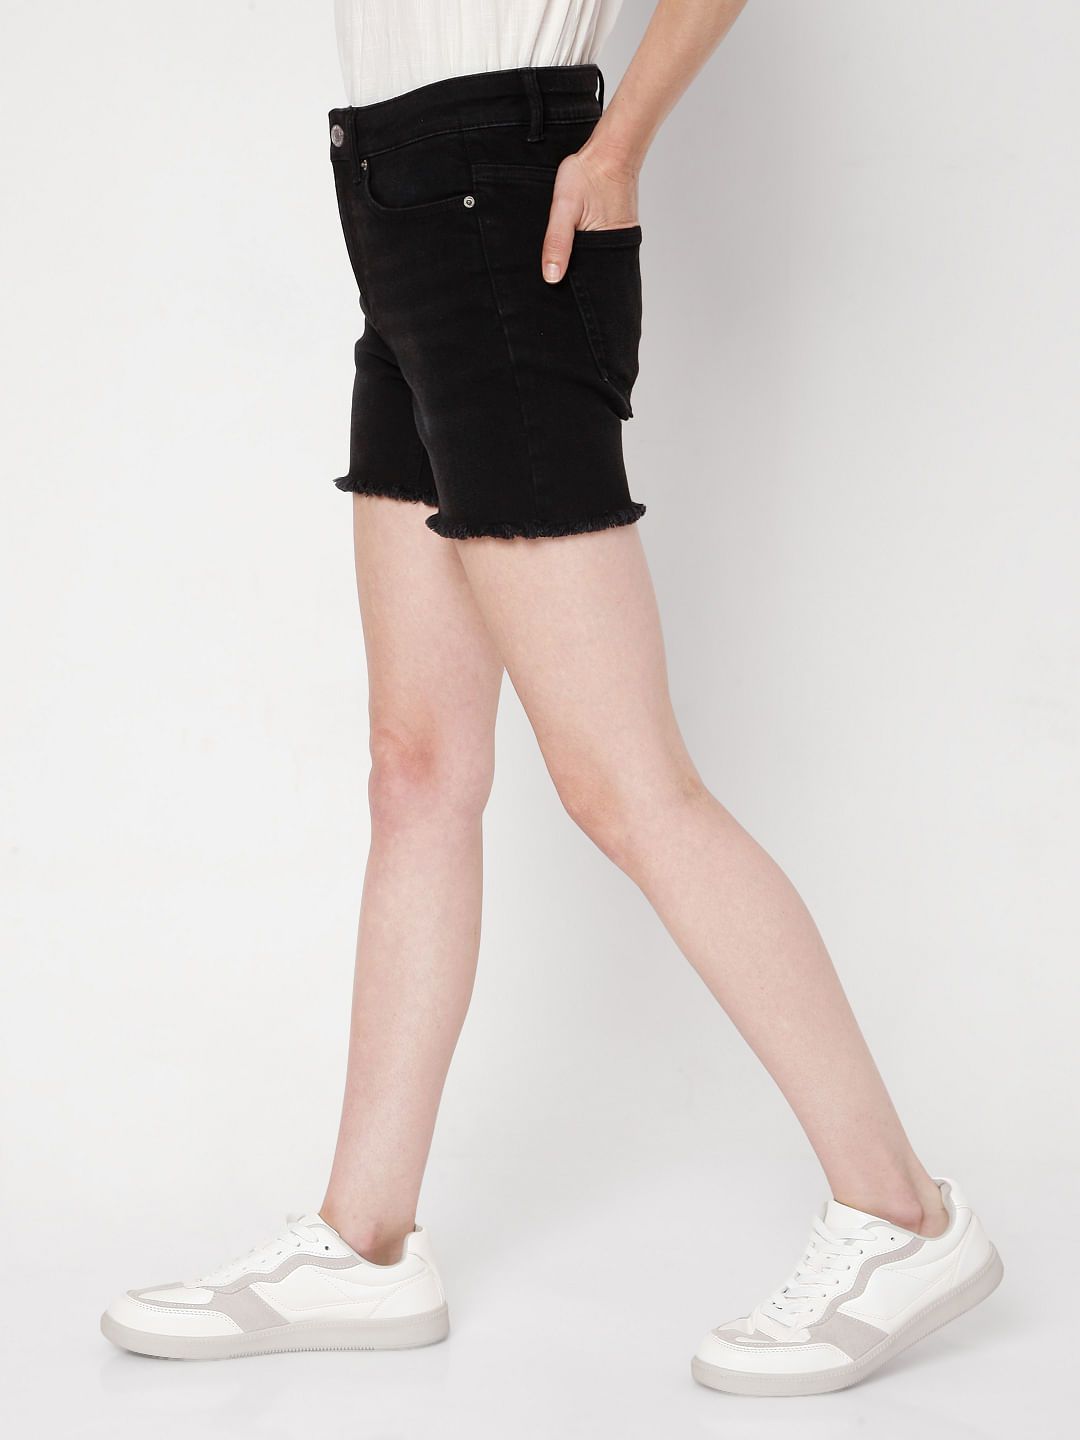 White Denim Shorts: Five Outfits - Michelle Tomczak